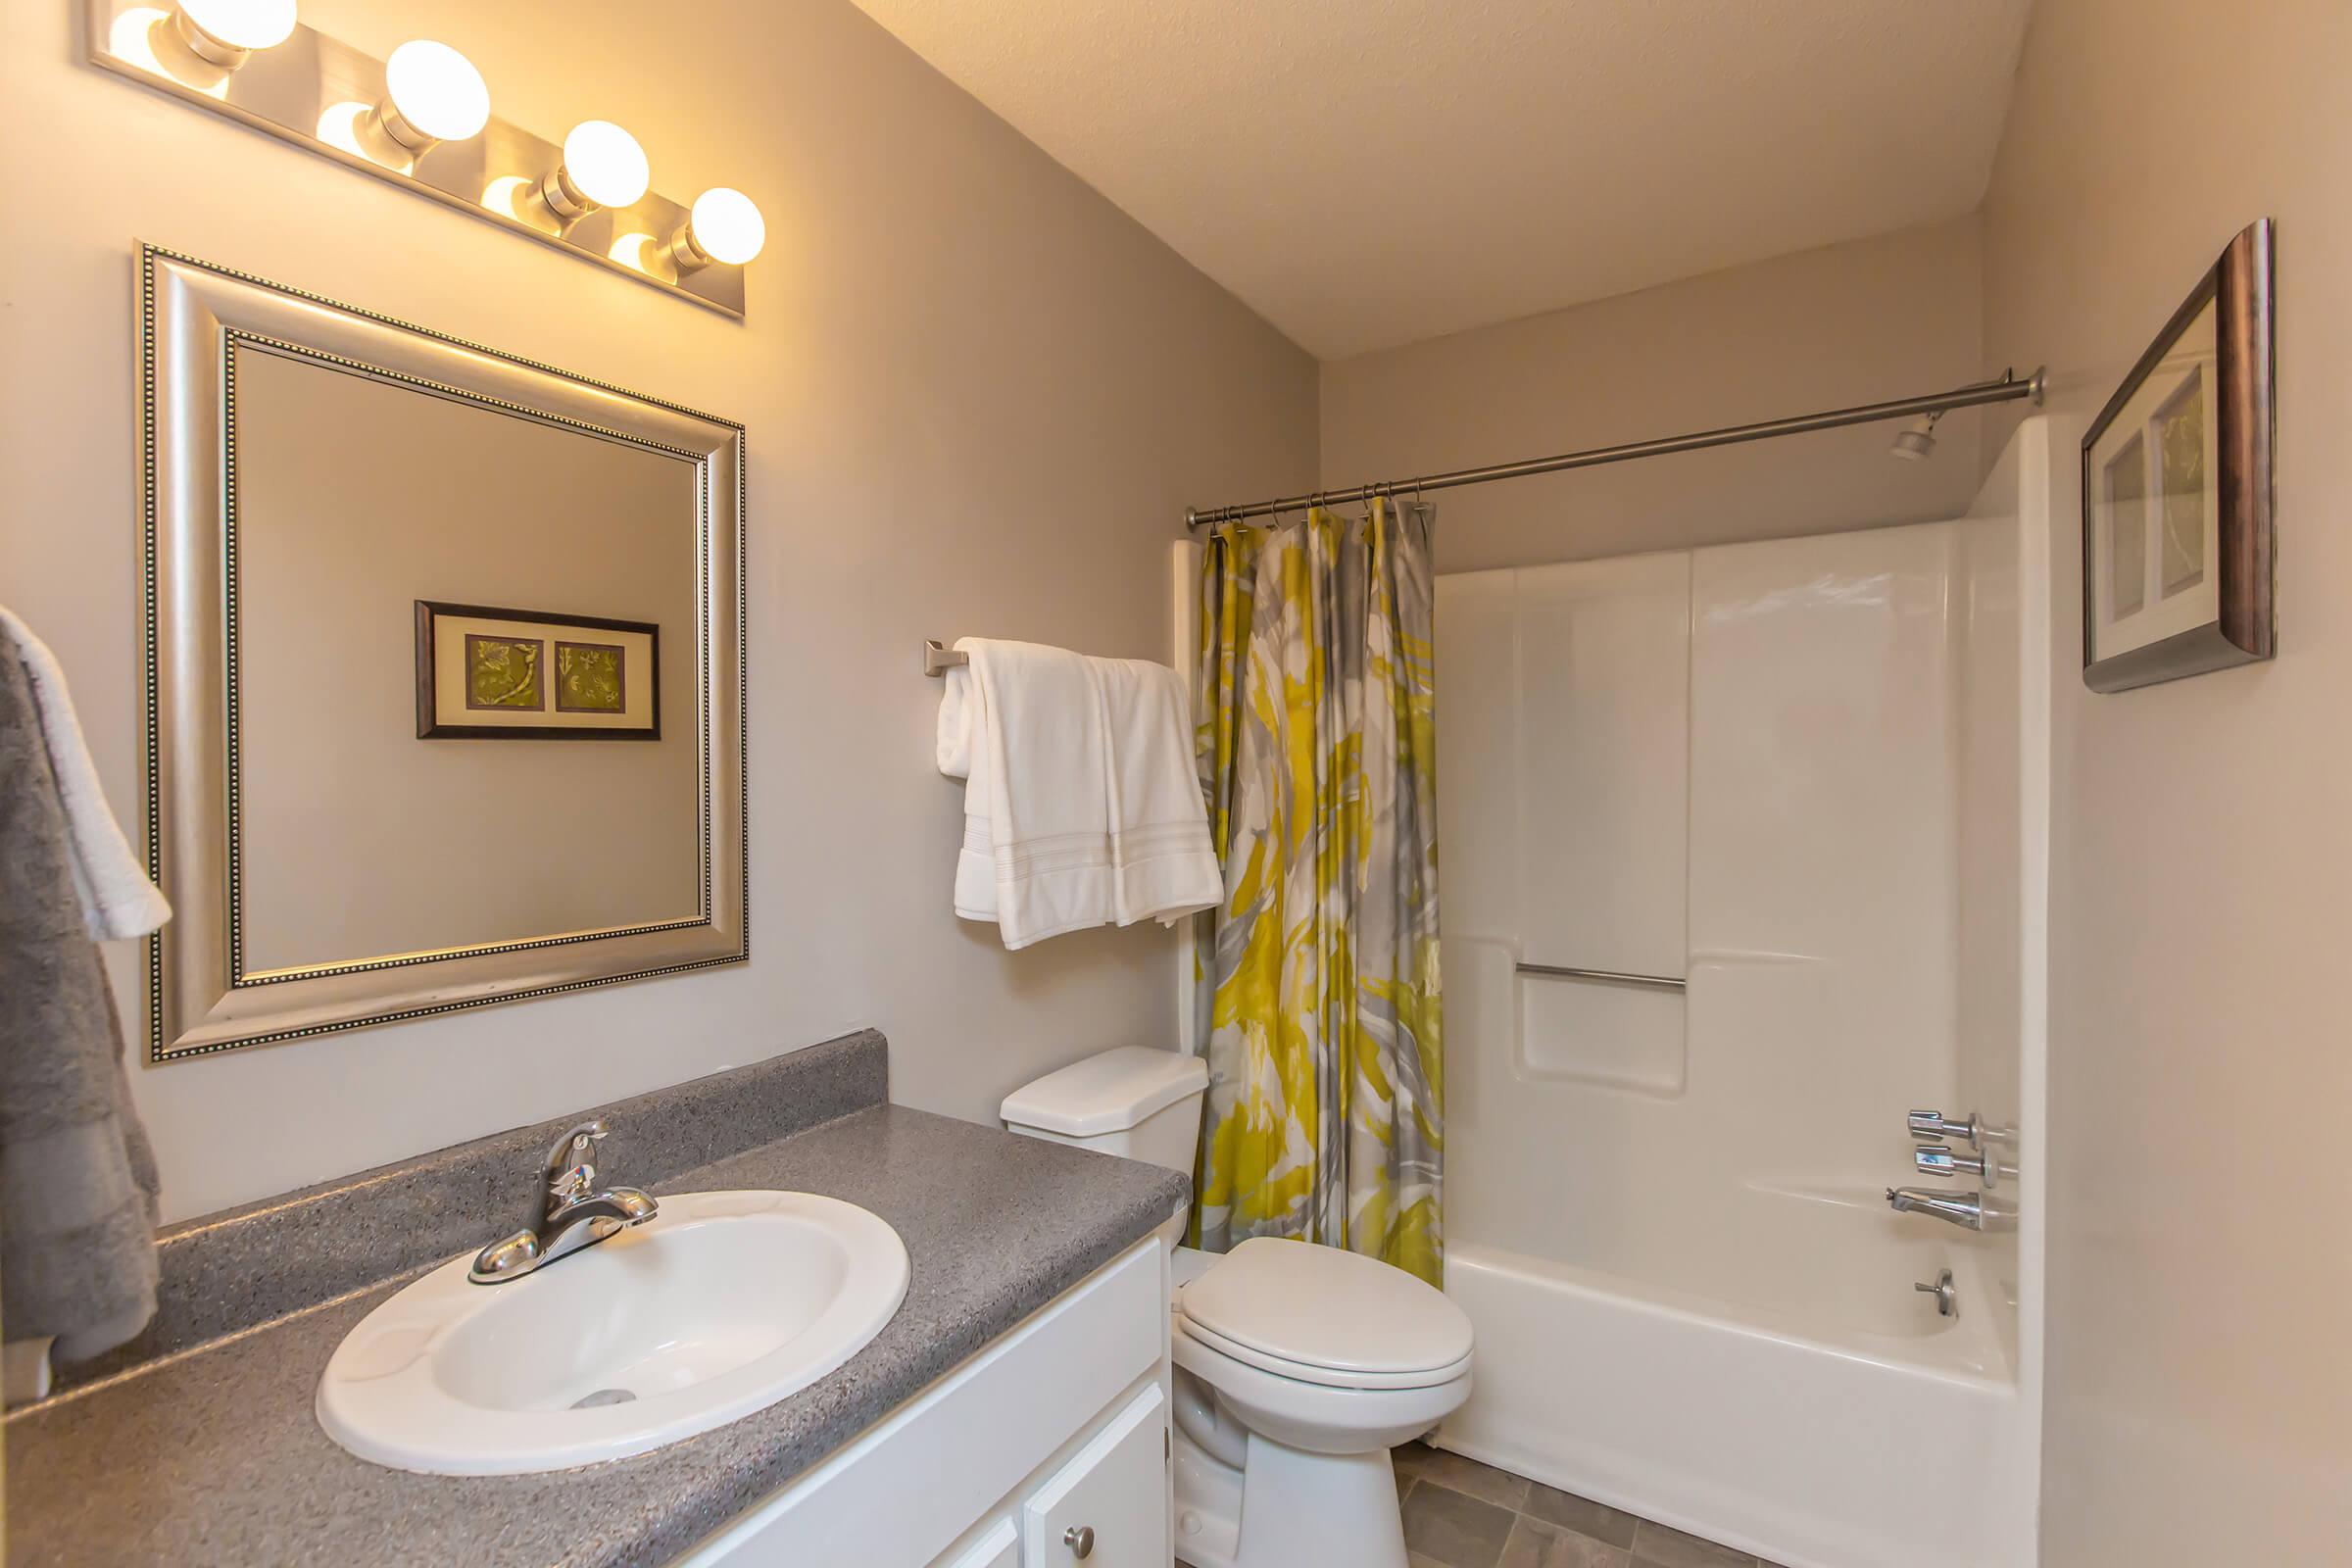 Bathroom with Bathtub - Lakeside Place Apartments - Greenville - South Carolina